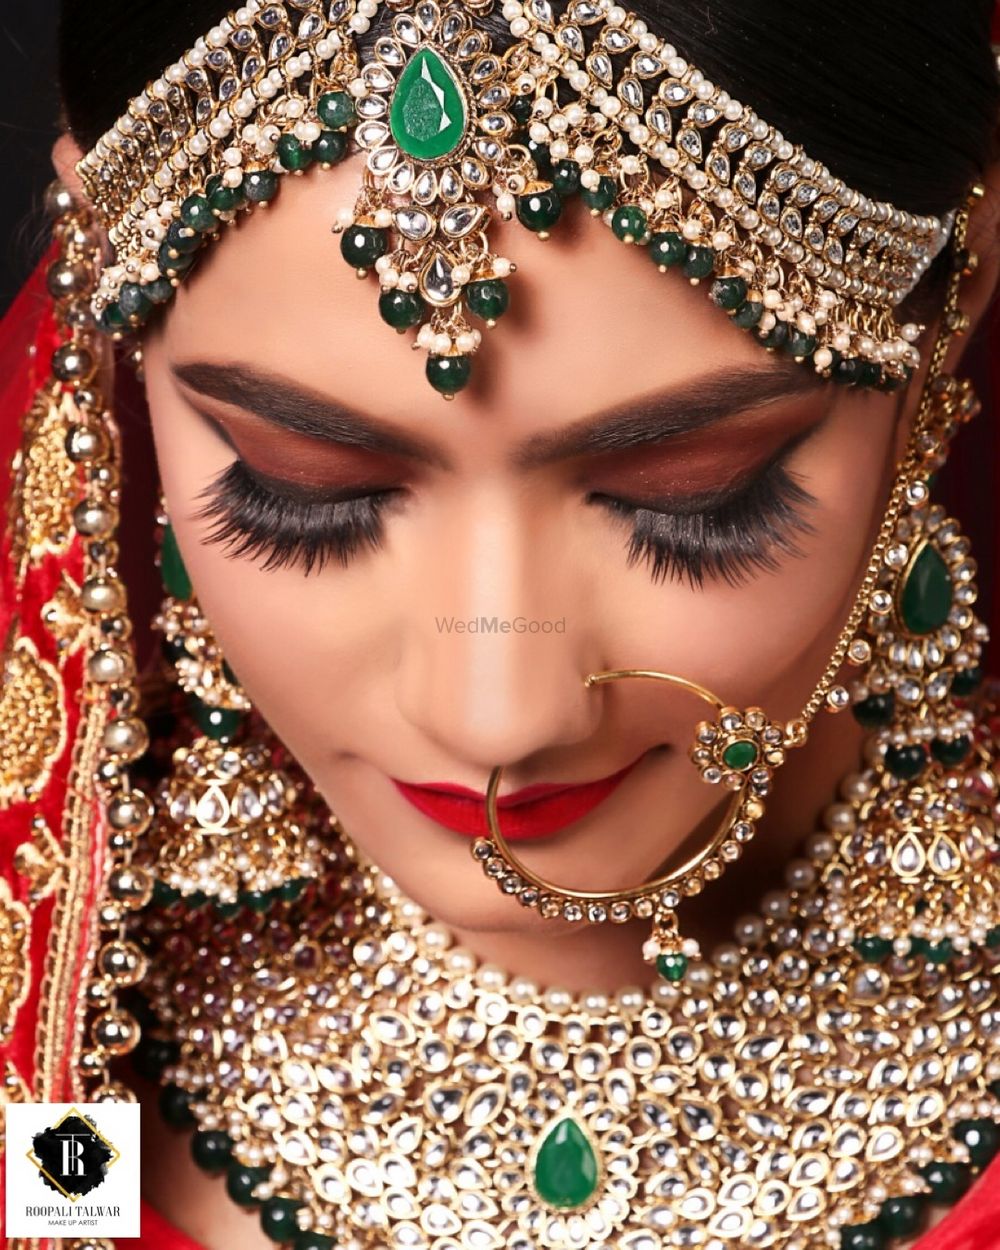 Photo From My dusky beautiful bride Yuganshi  - By Roopali Talwar Makeup Artist